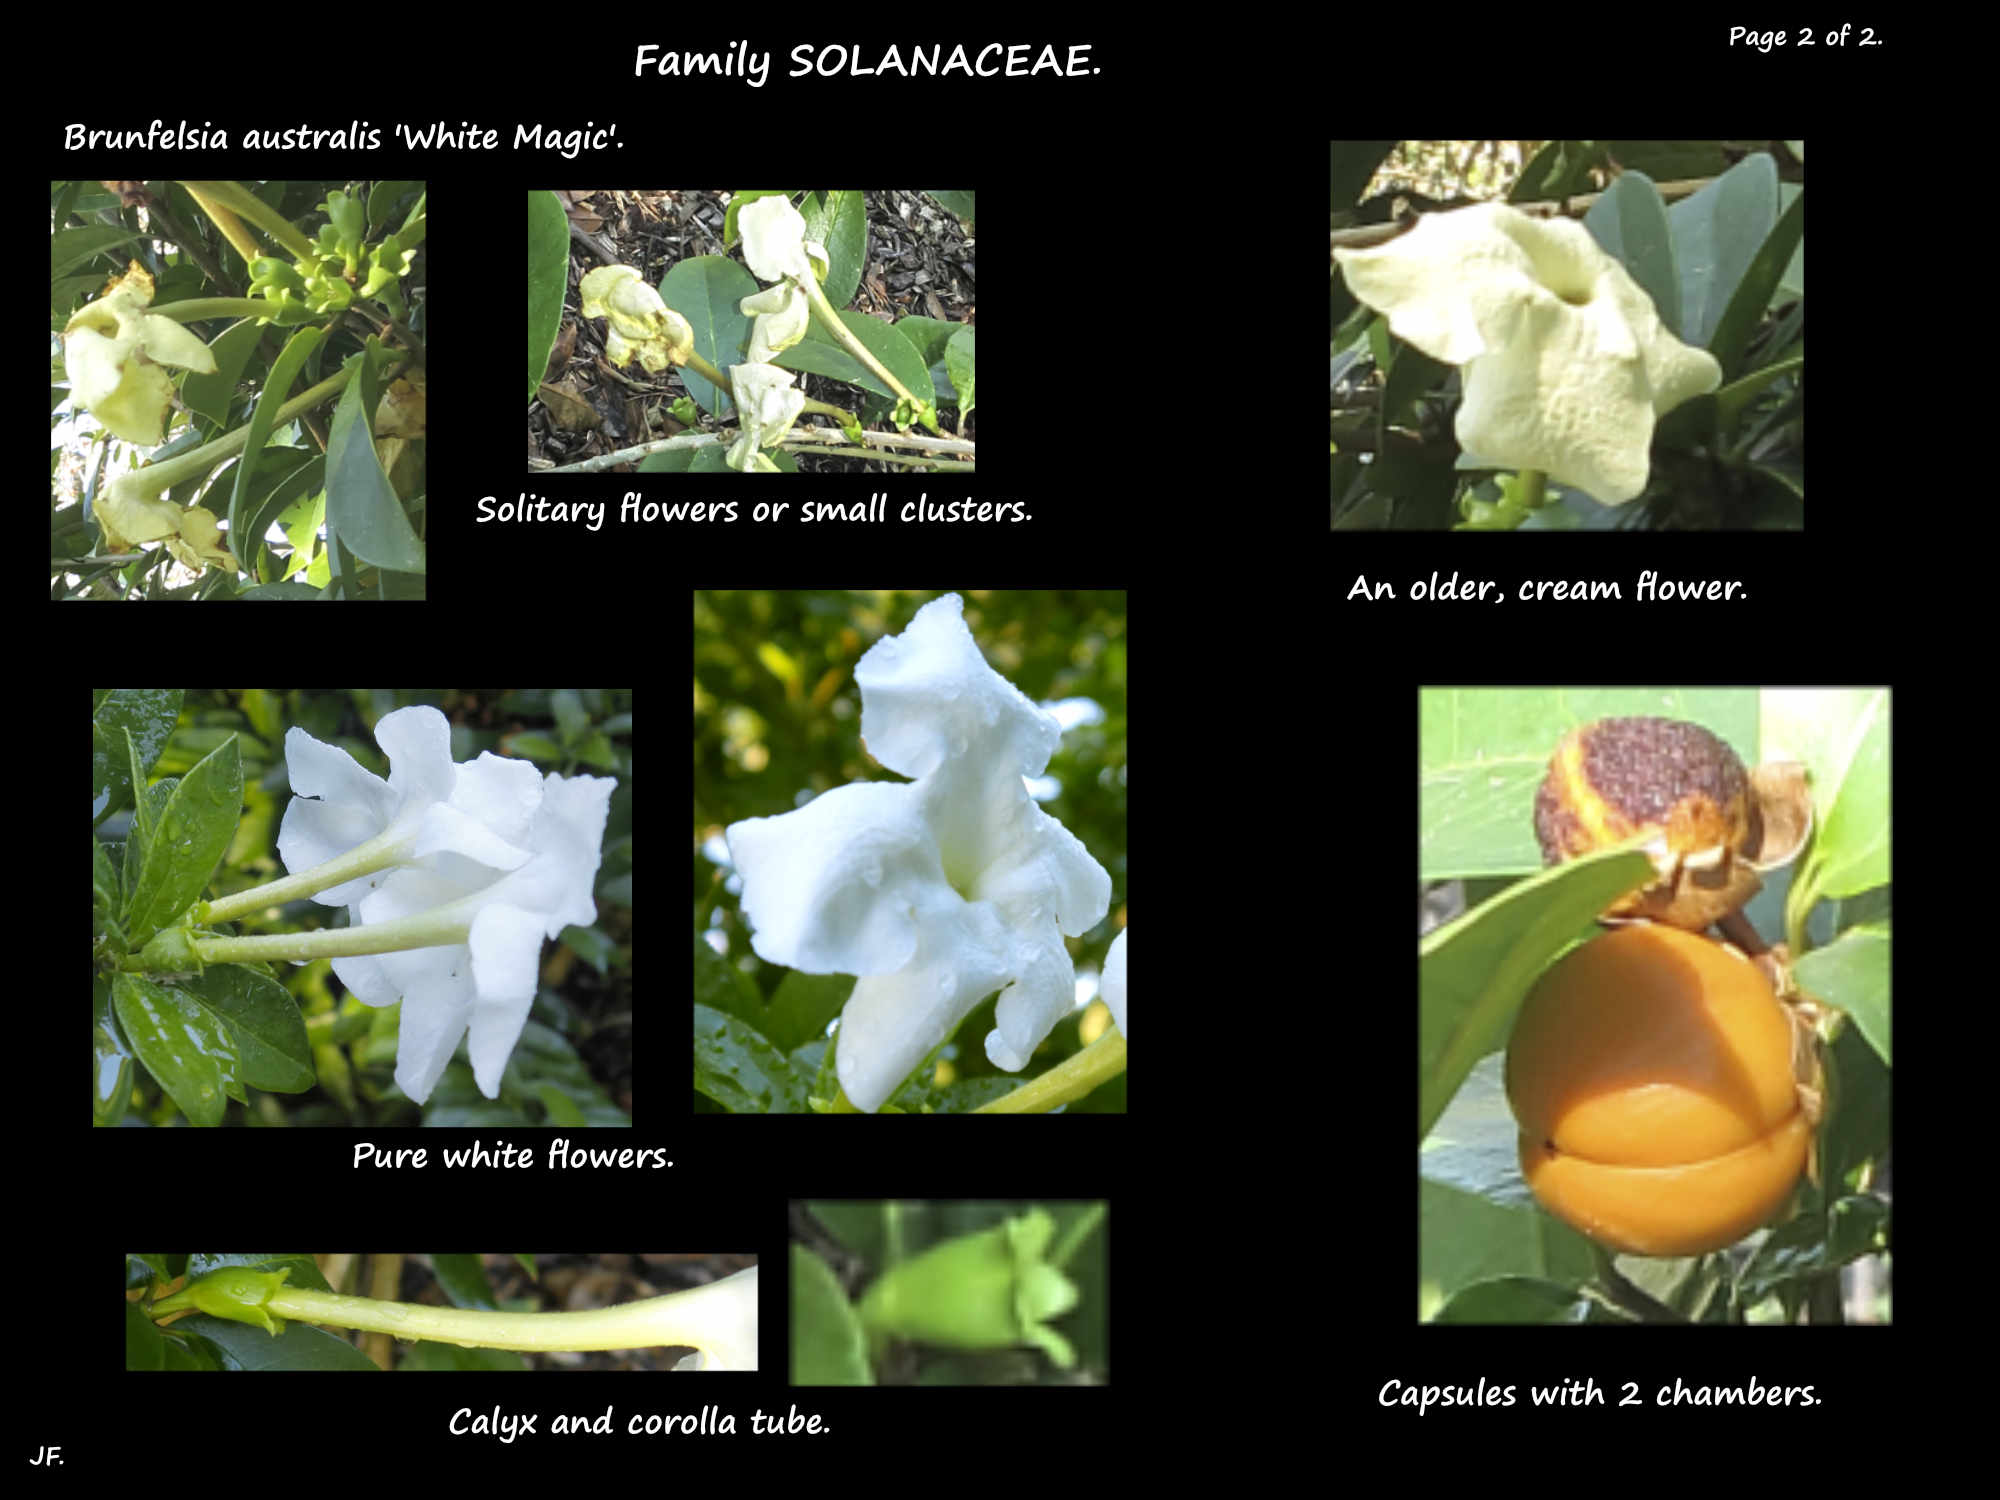 2 Brunfelsia australis 'White Magic' flowers & fruit